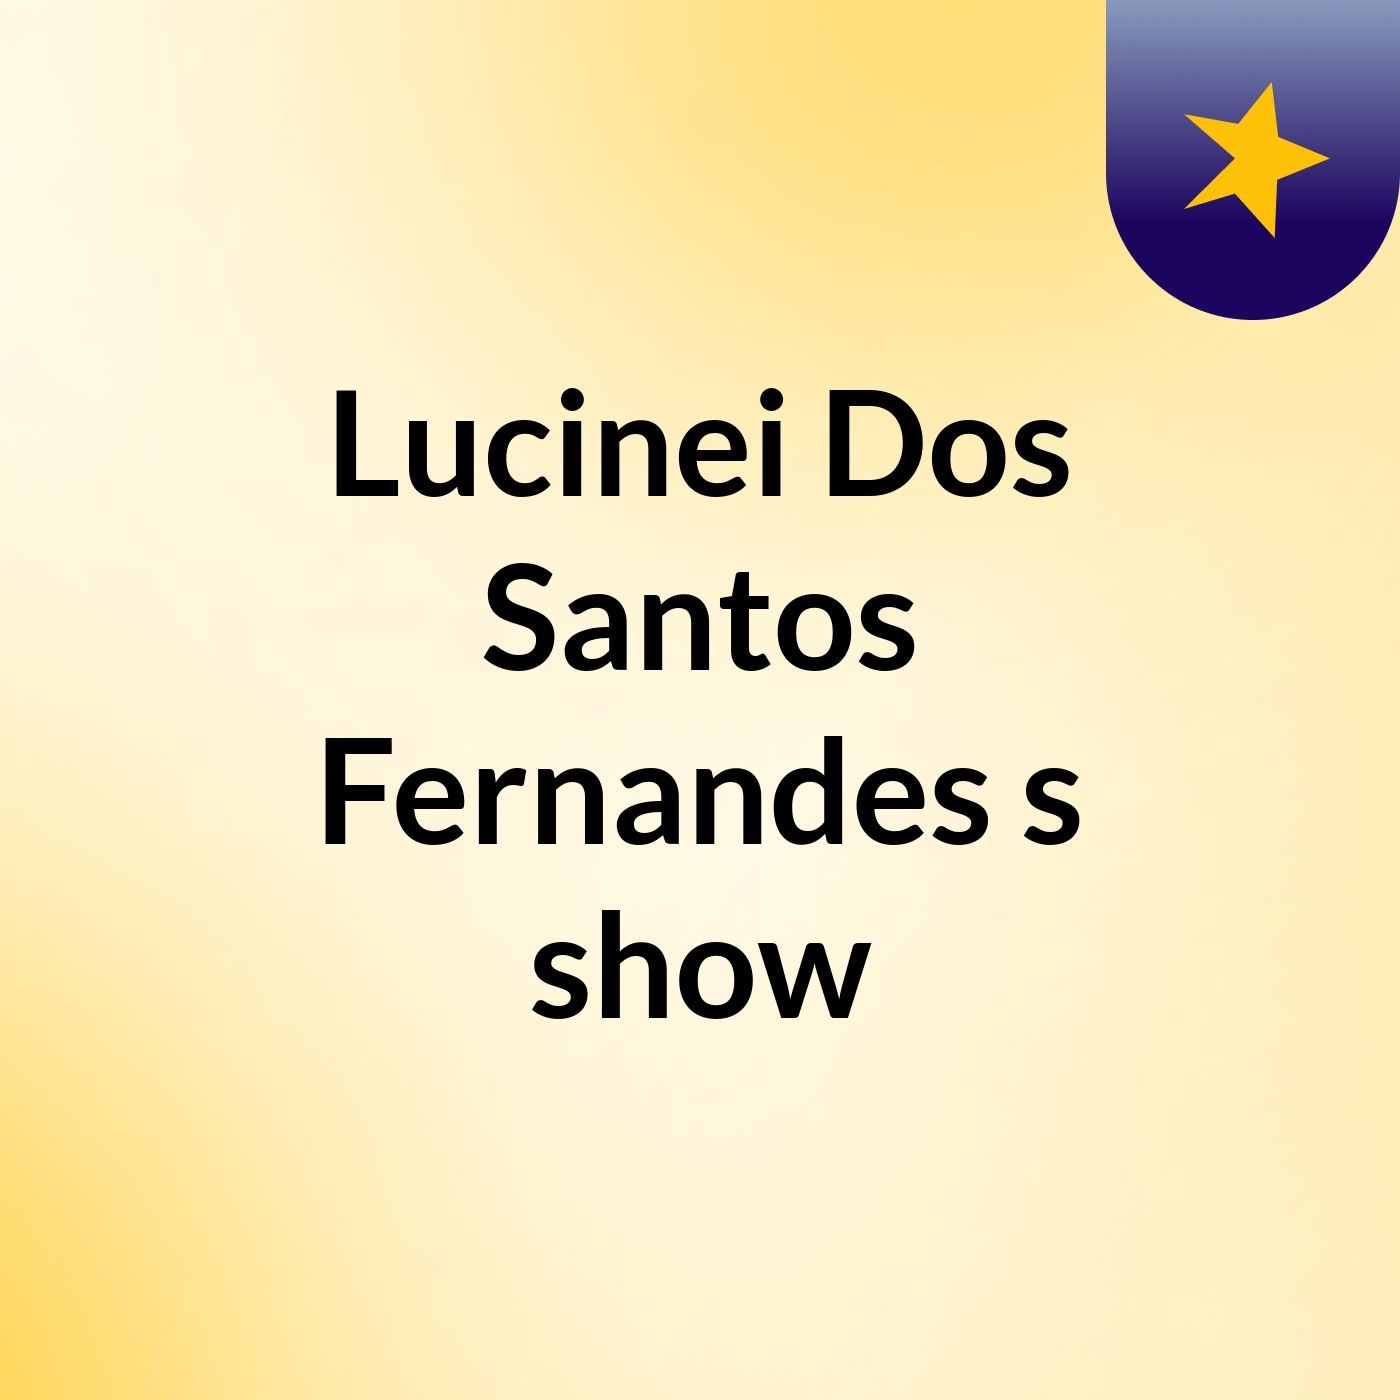 Lucinei Dos Santos Fernandes's show